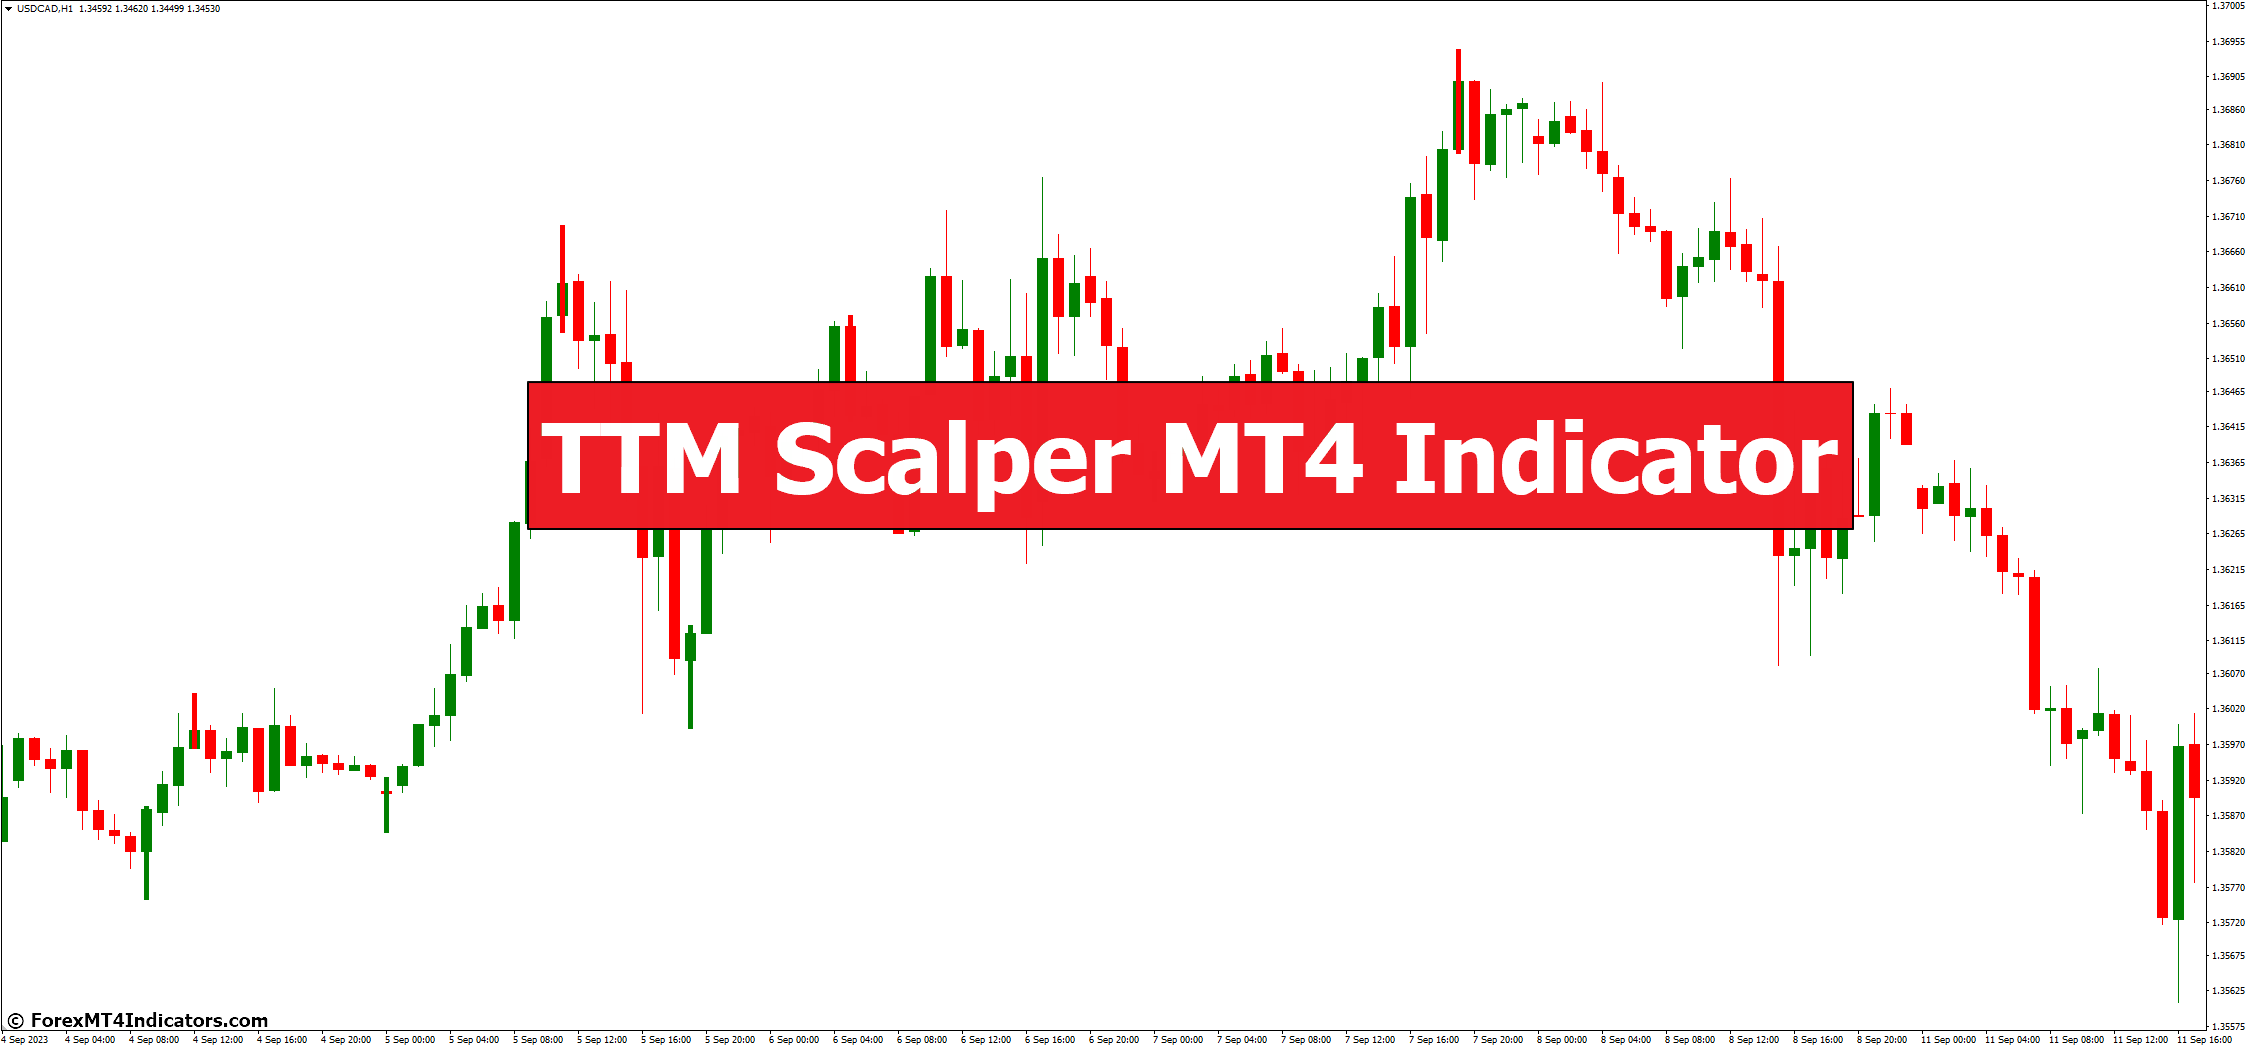 TTM Scalper MT4 Indicator